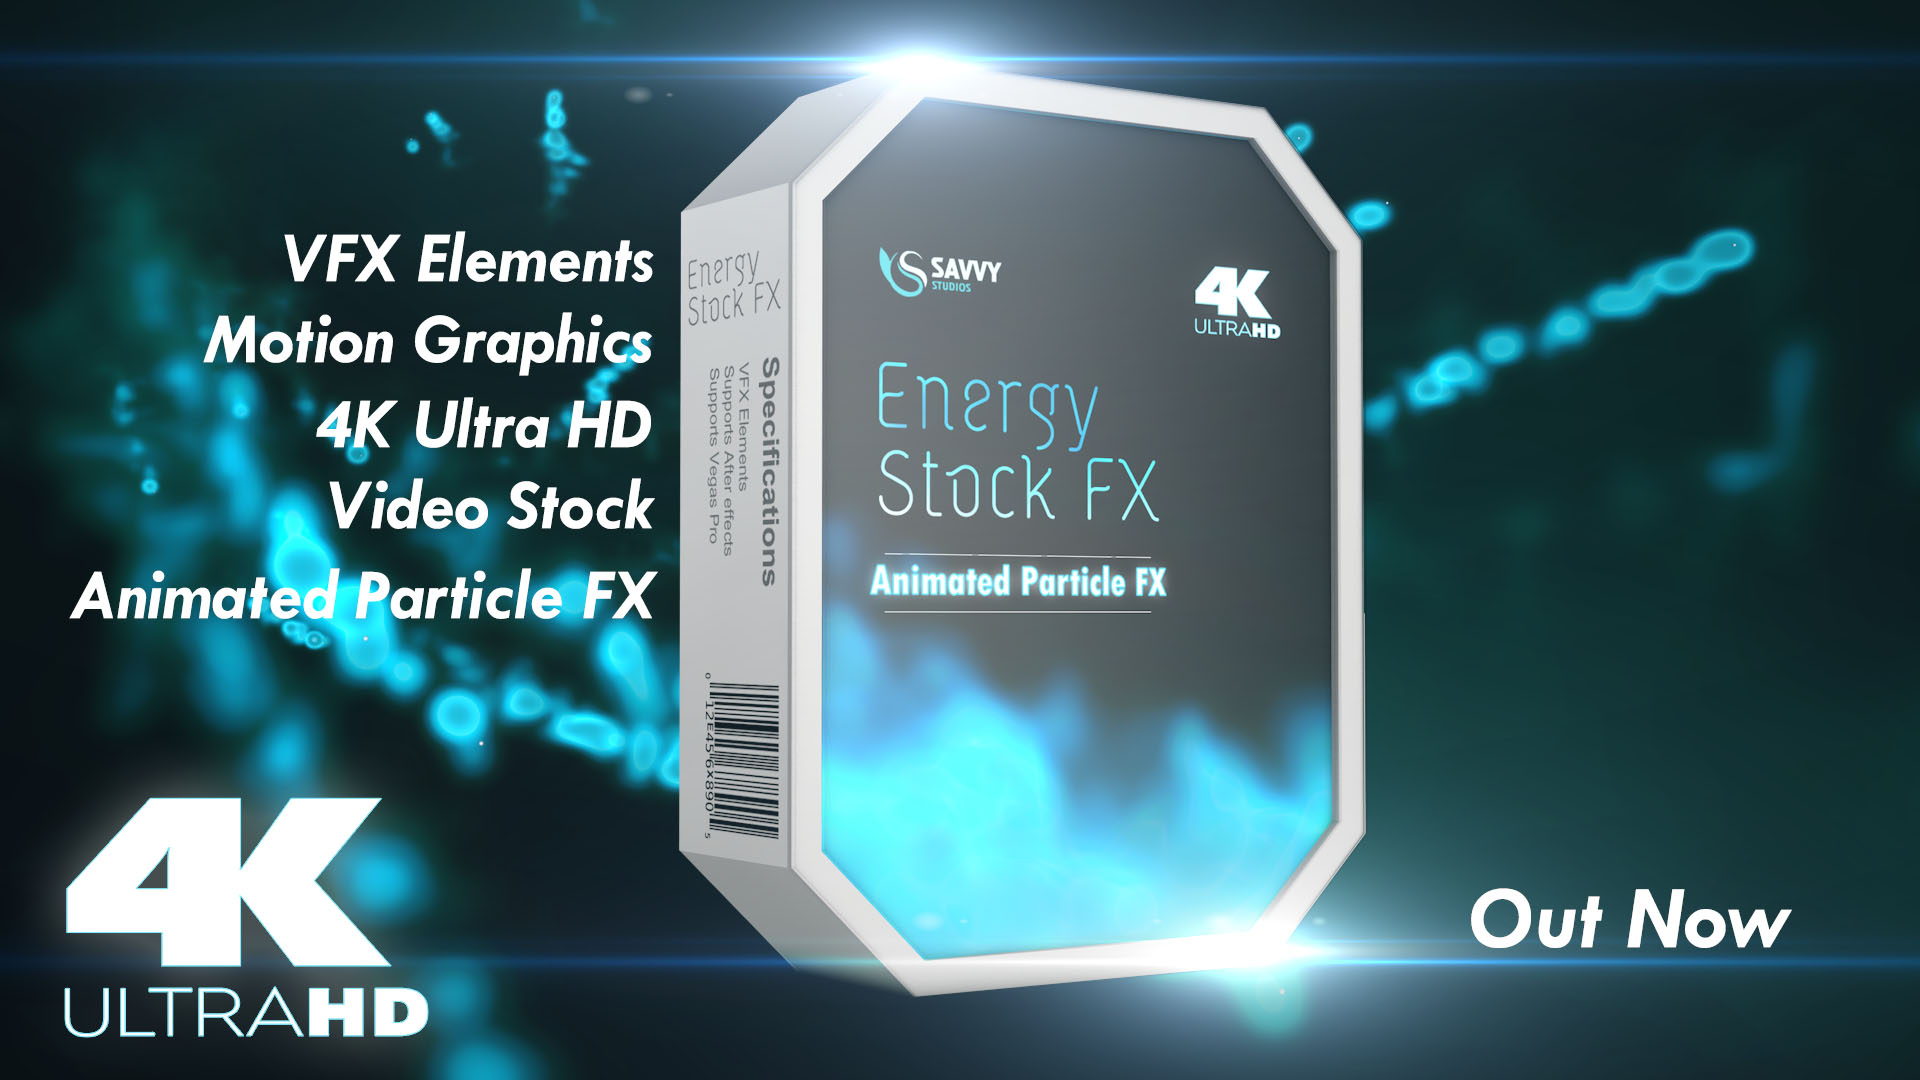 Buy Energy Stock-FX in 4K